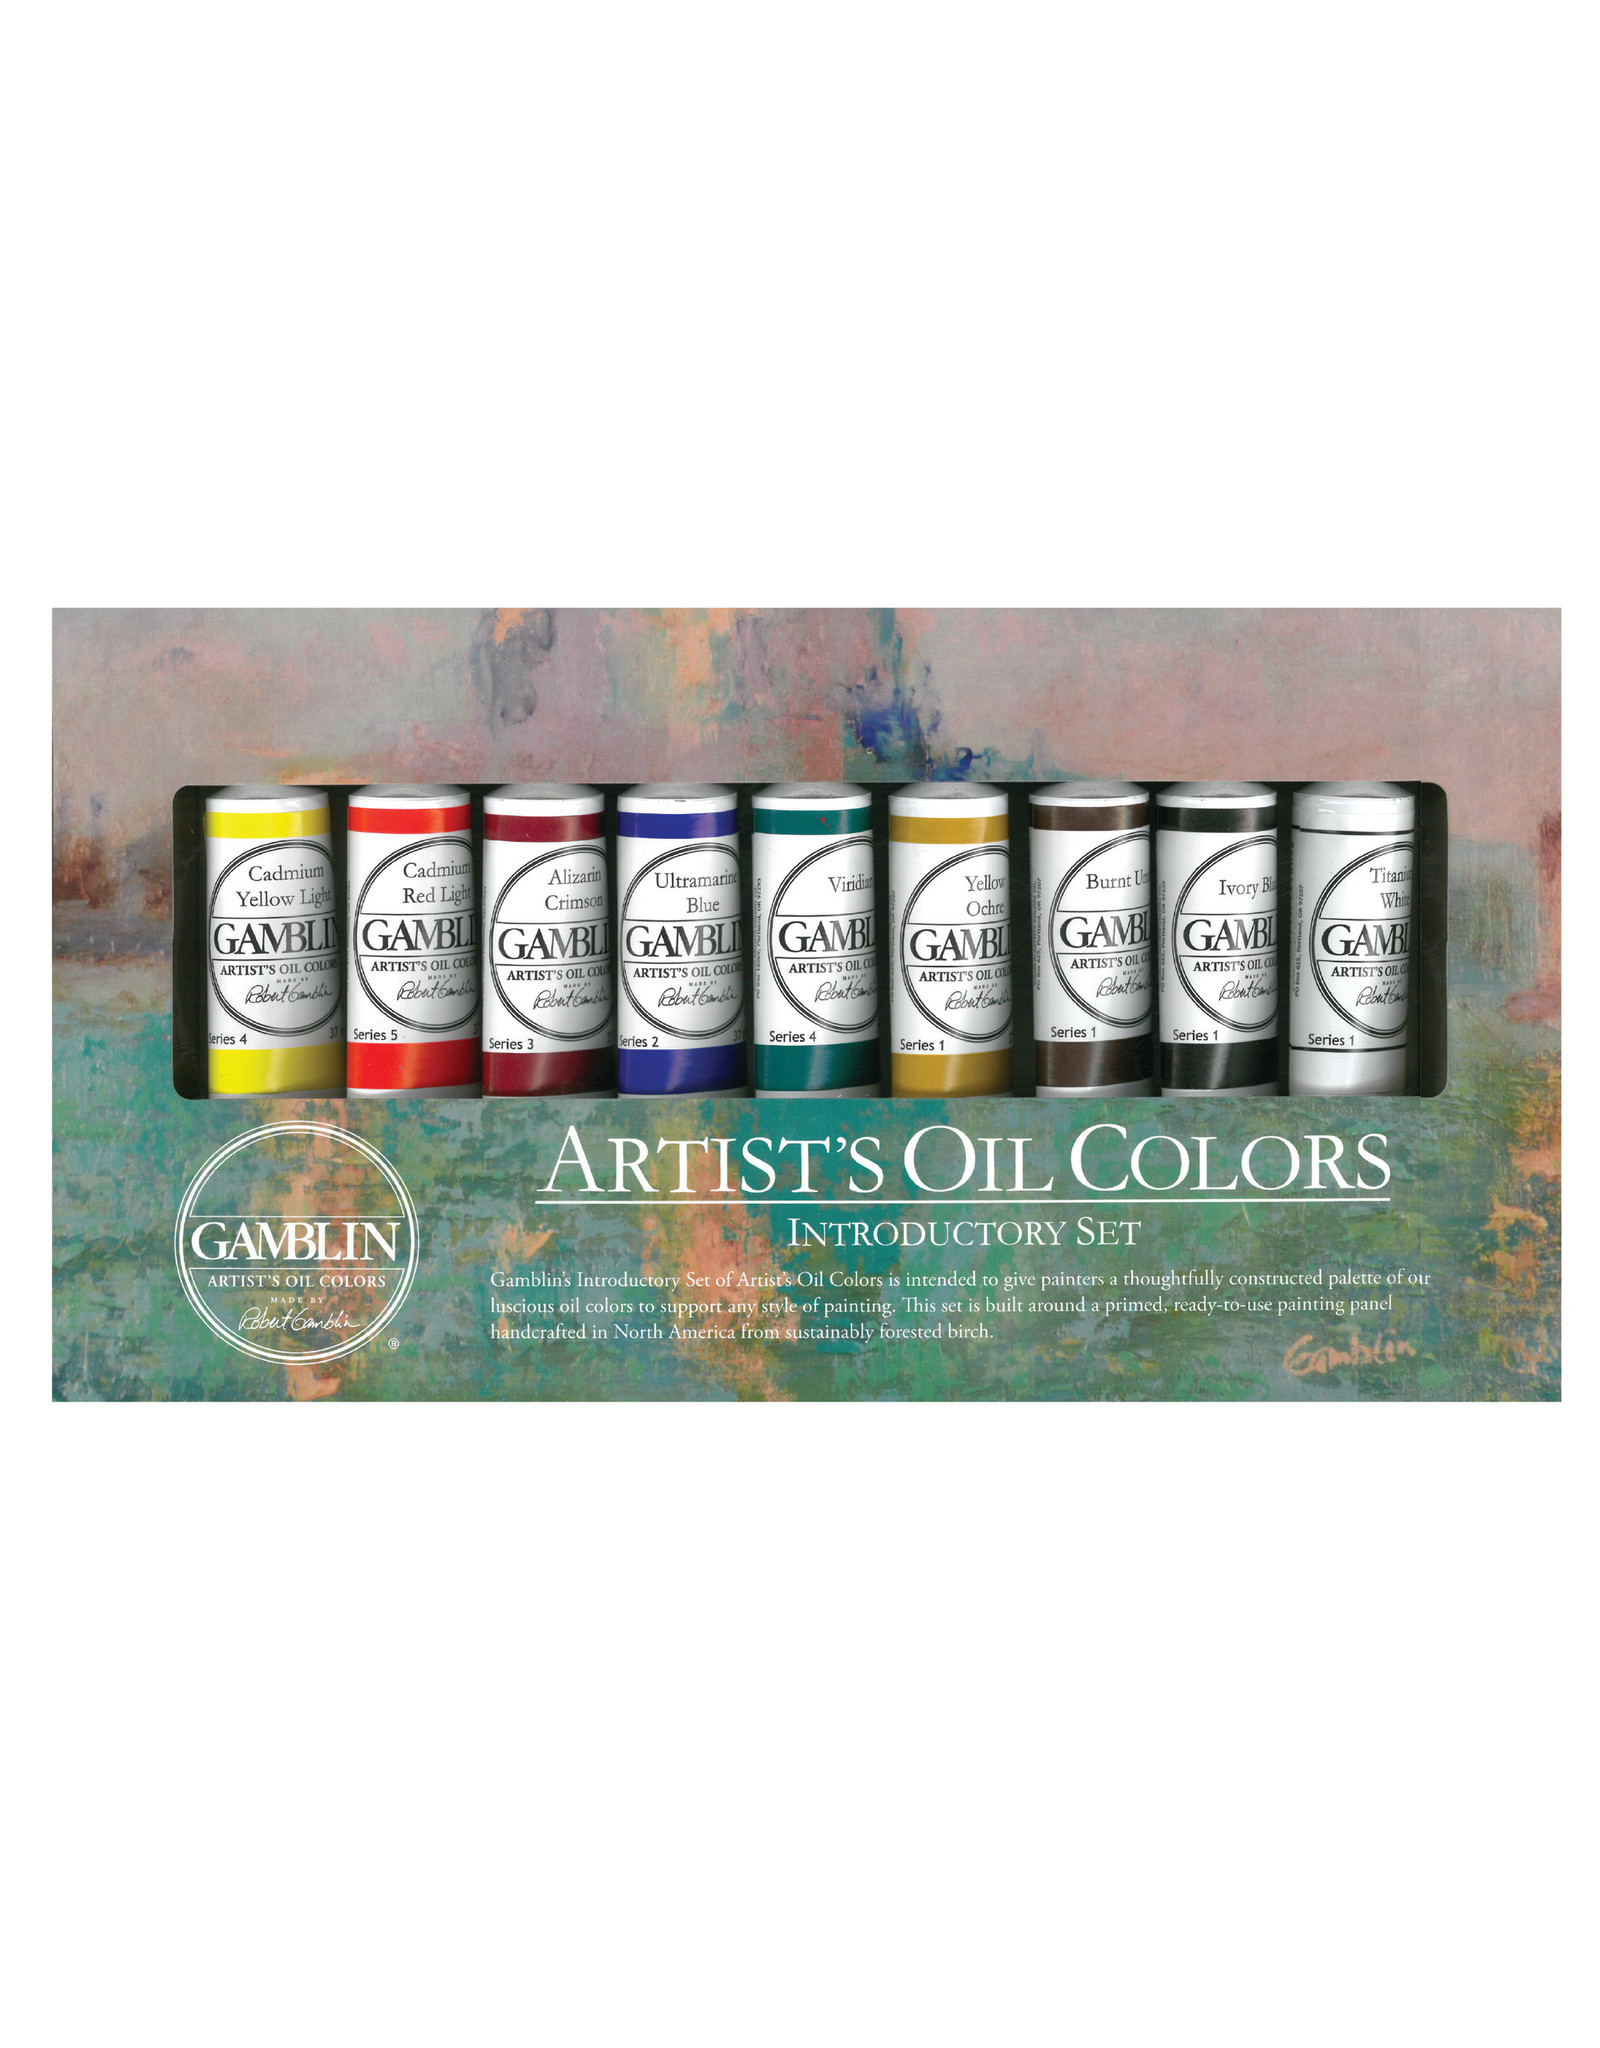 Gamblin Artist Oil Colours 37ml